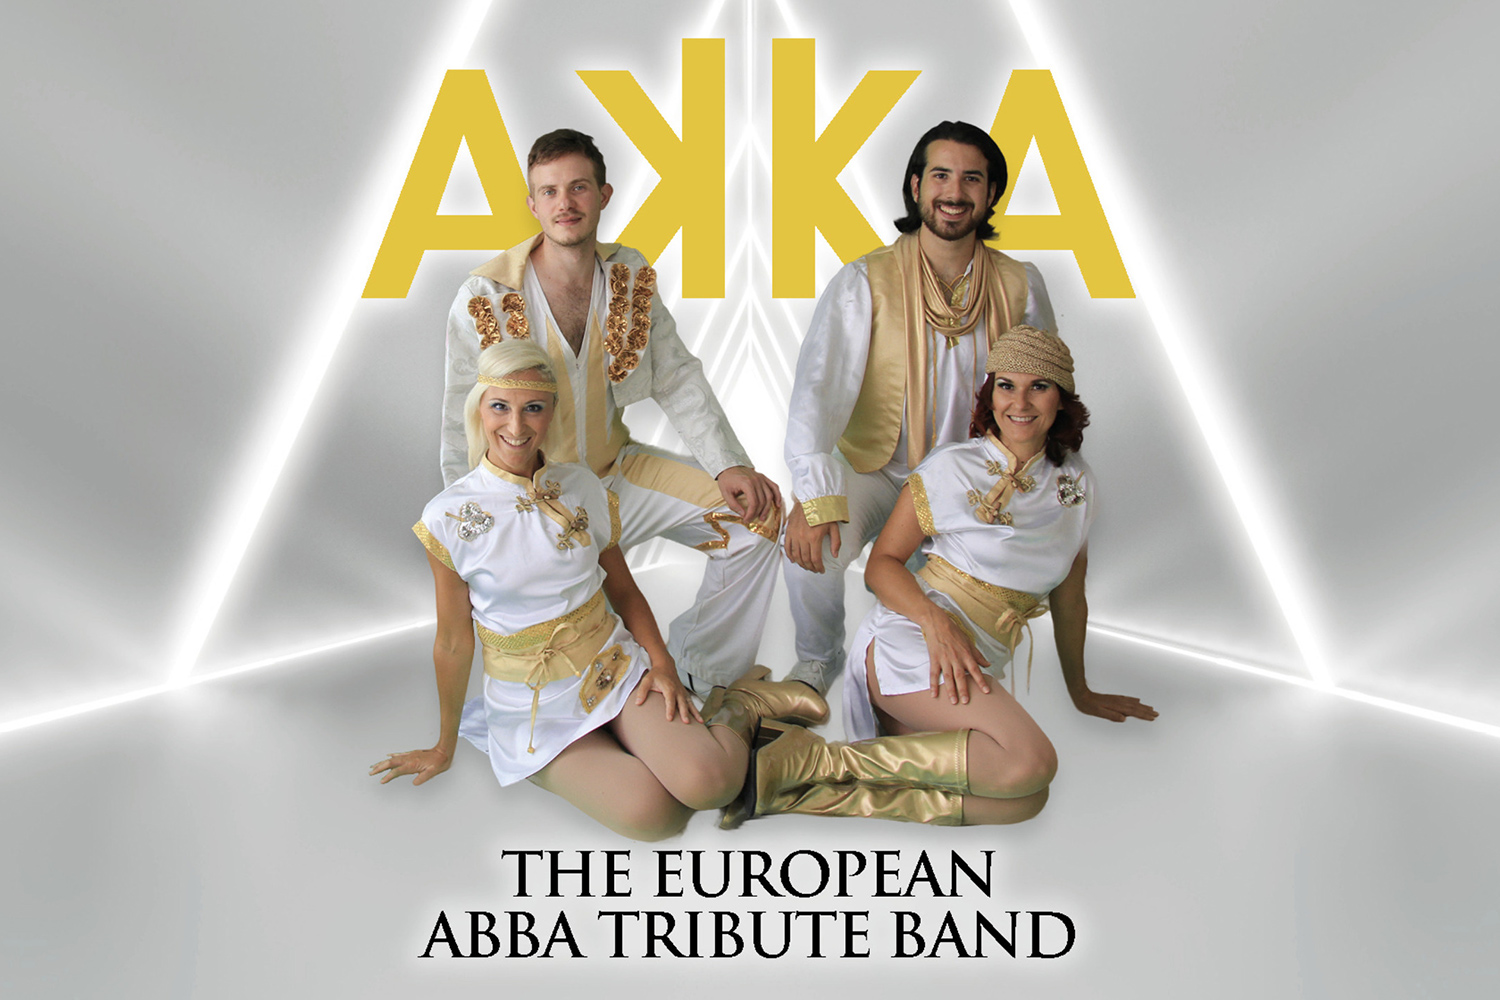 Akka Tribute Band